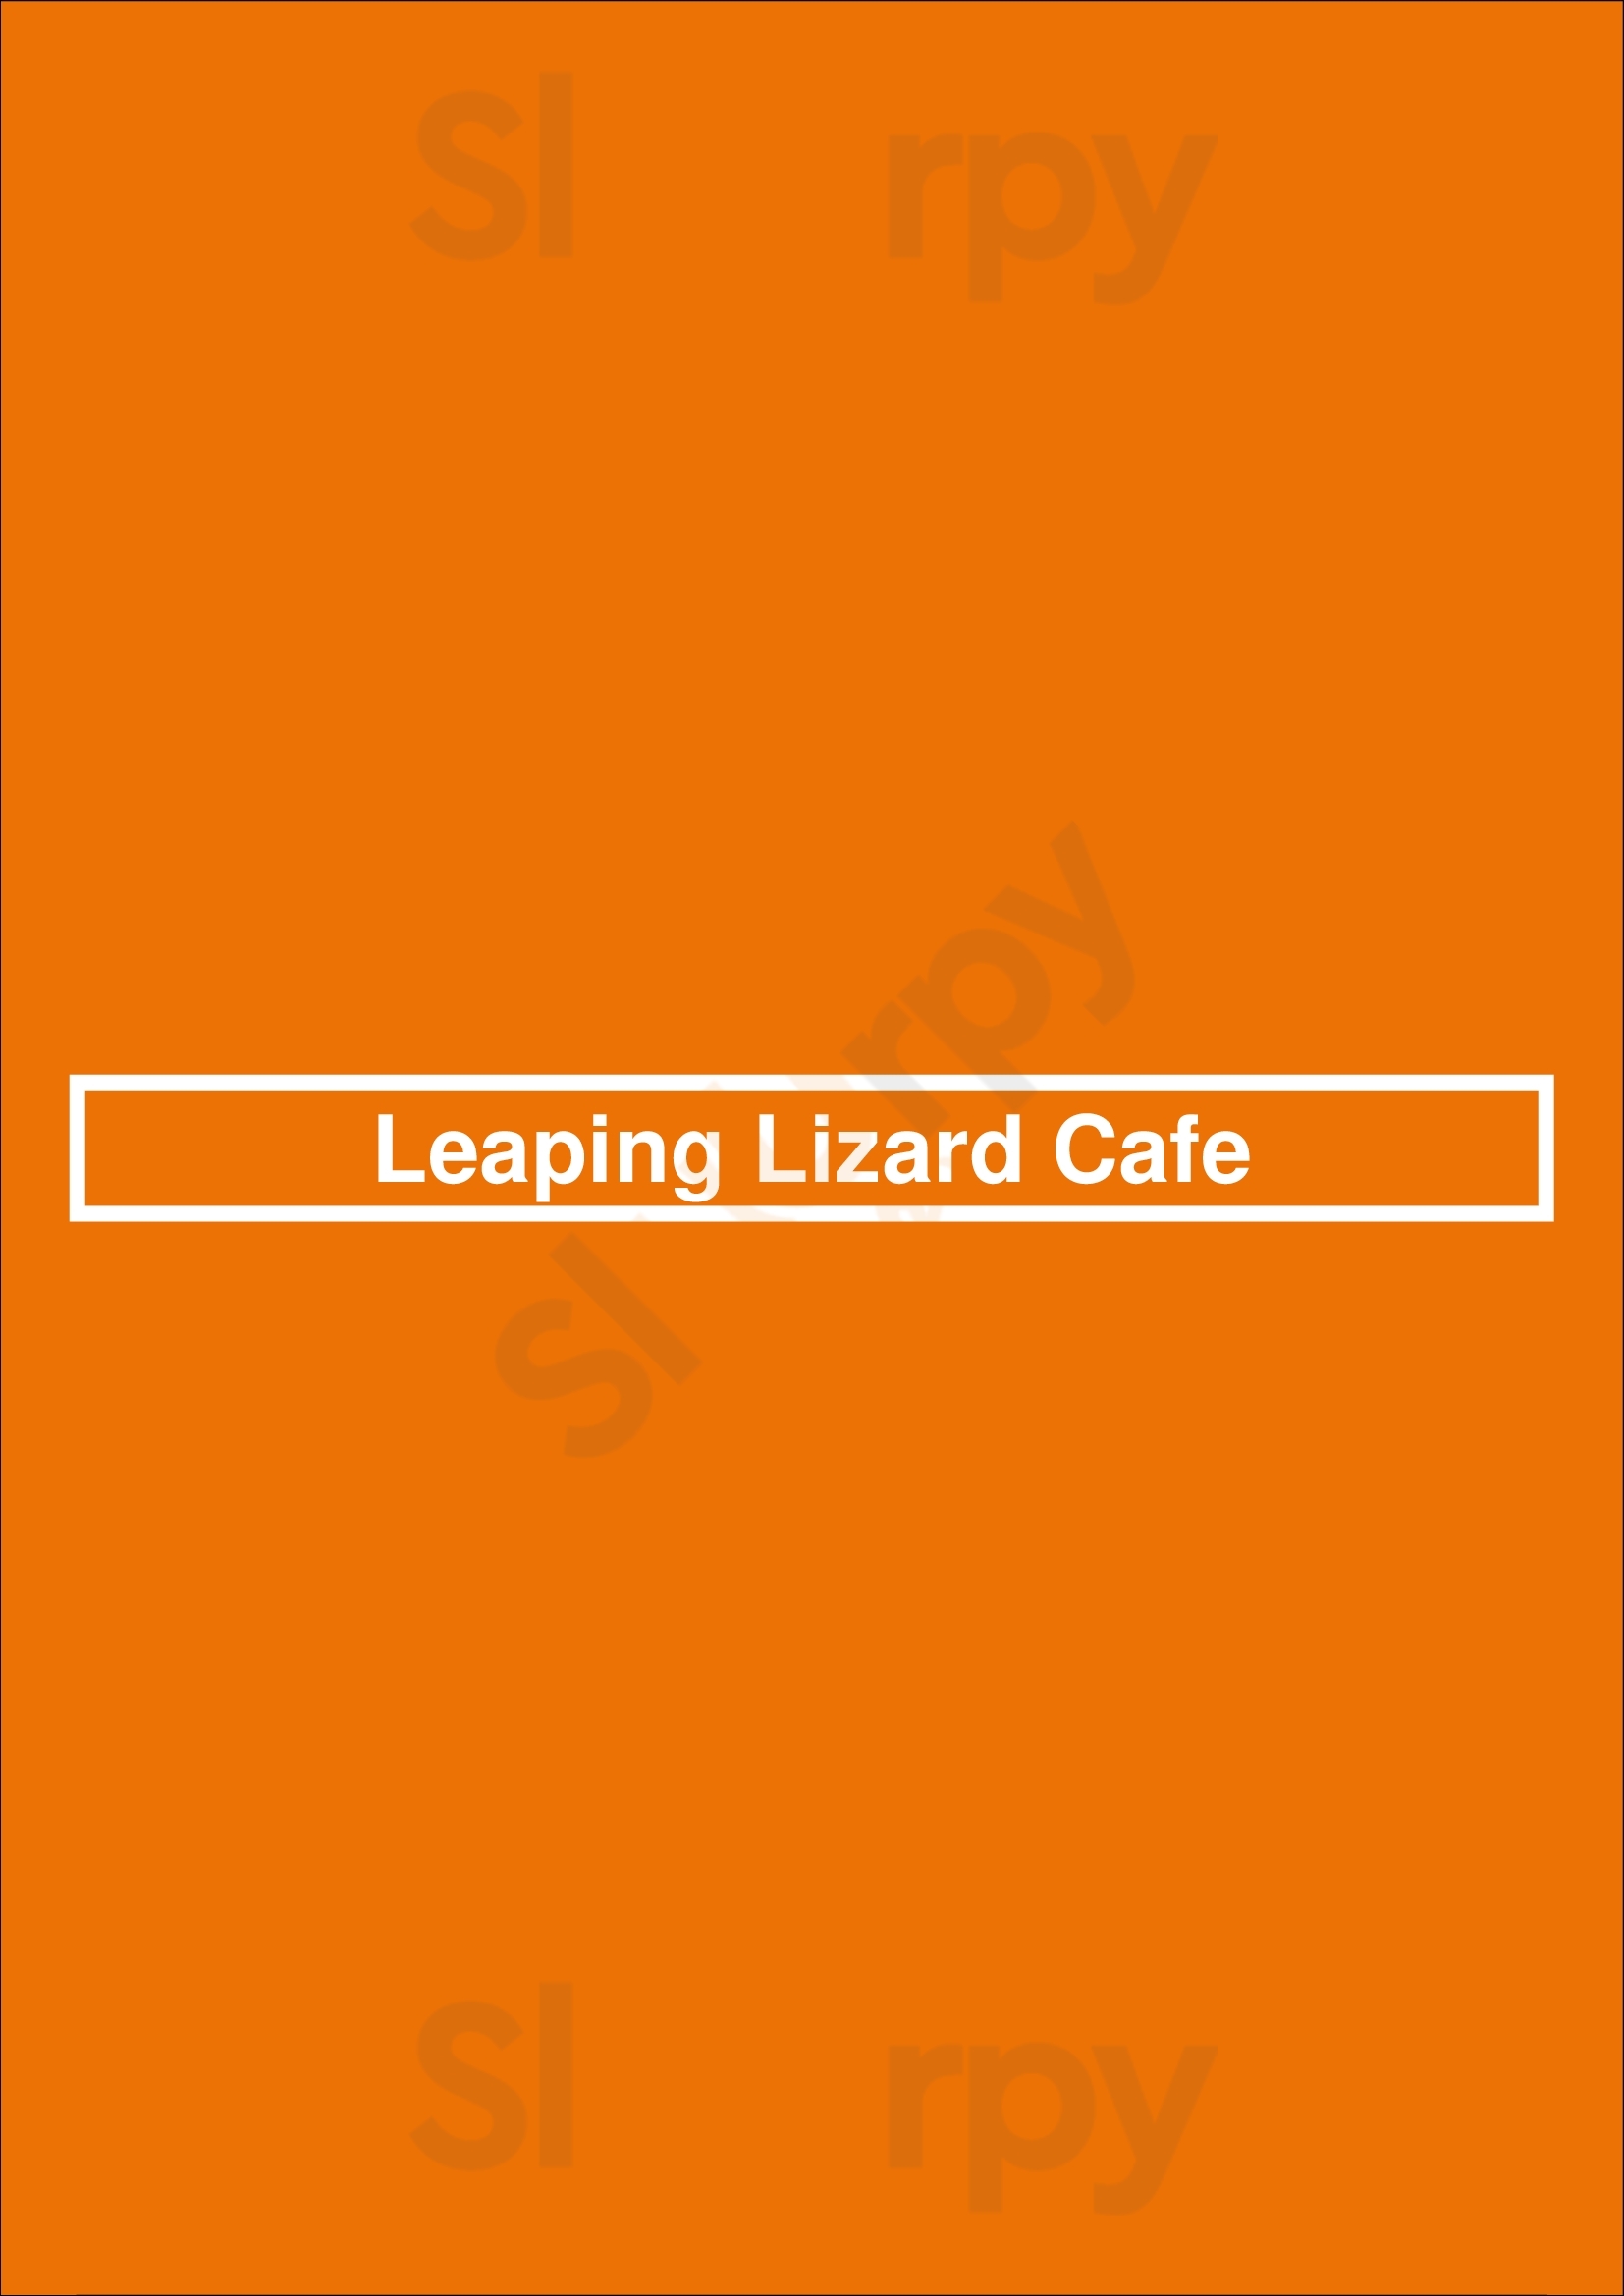 Leaping Lizard Cafe Virginia Beach Menu - 1